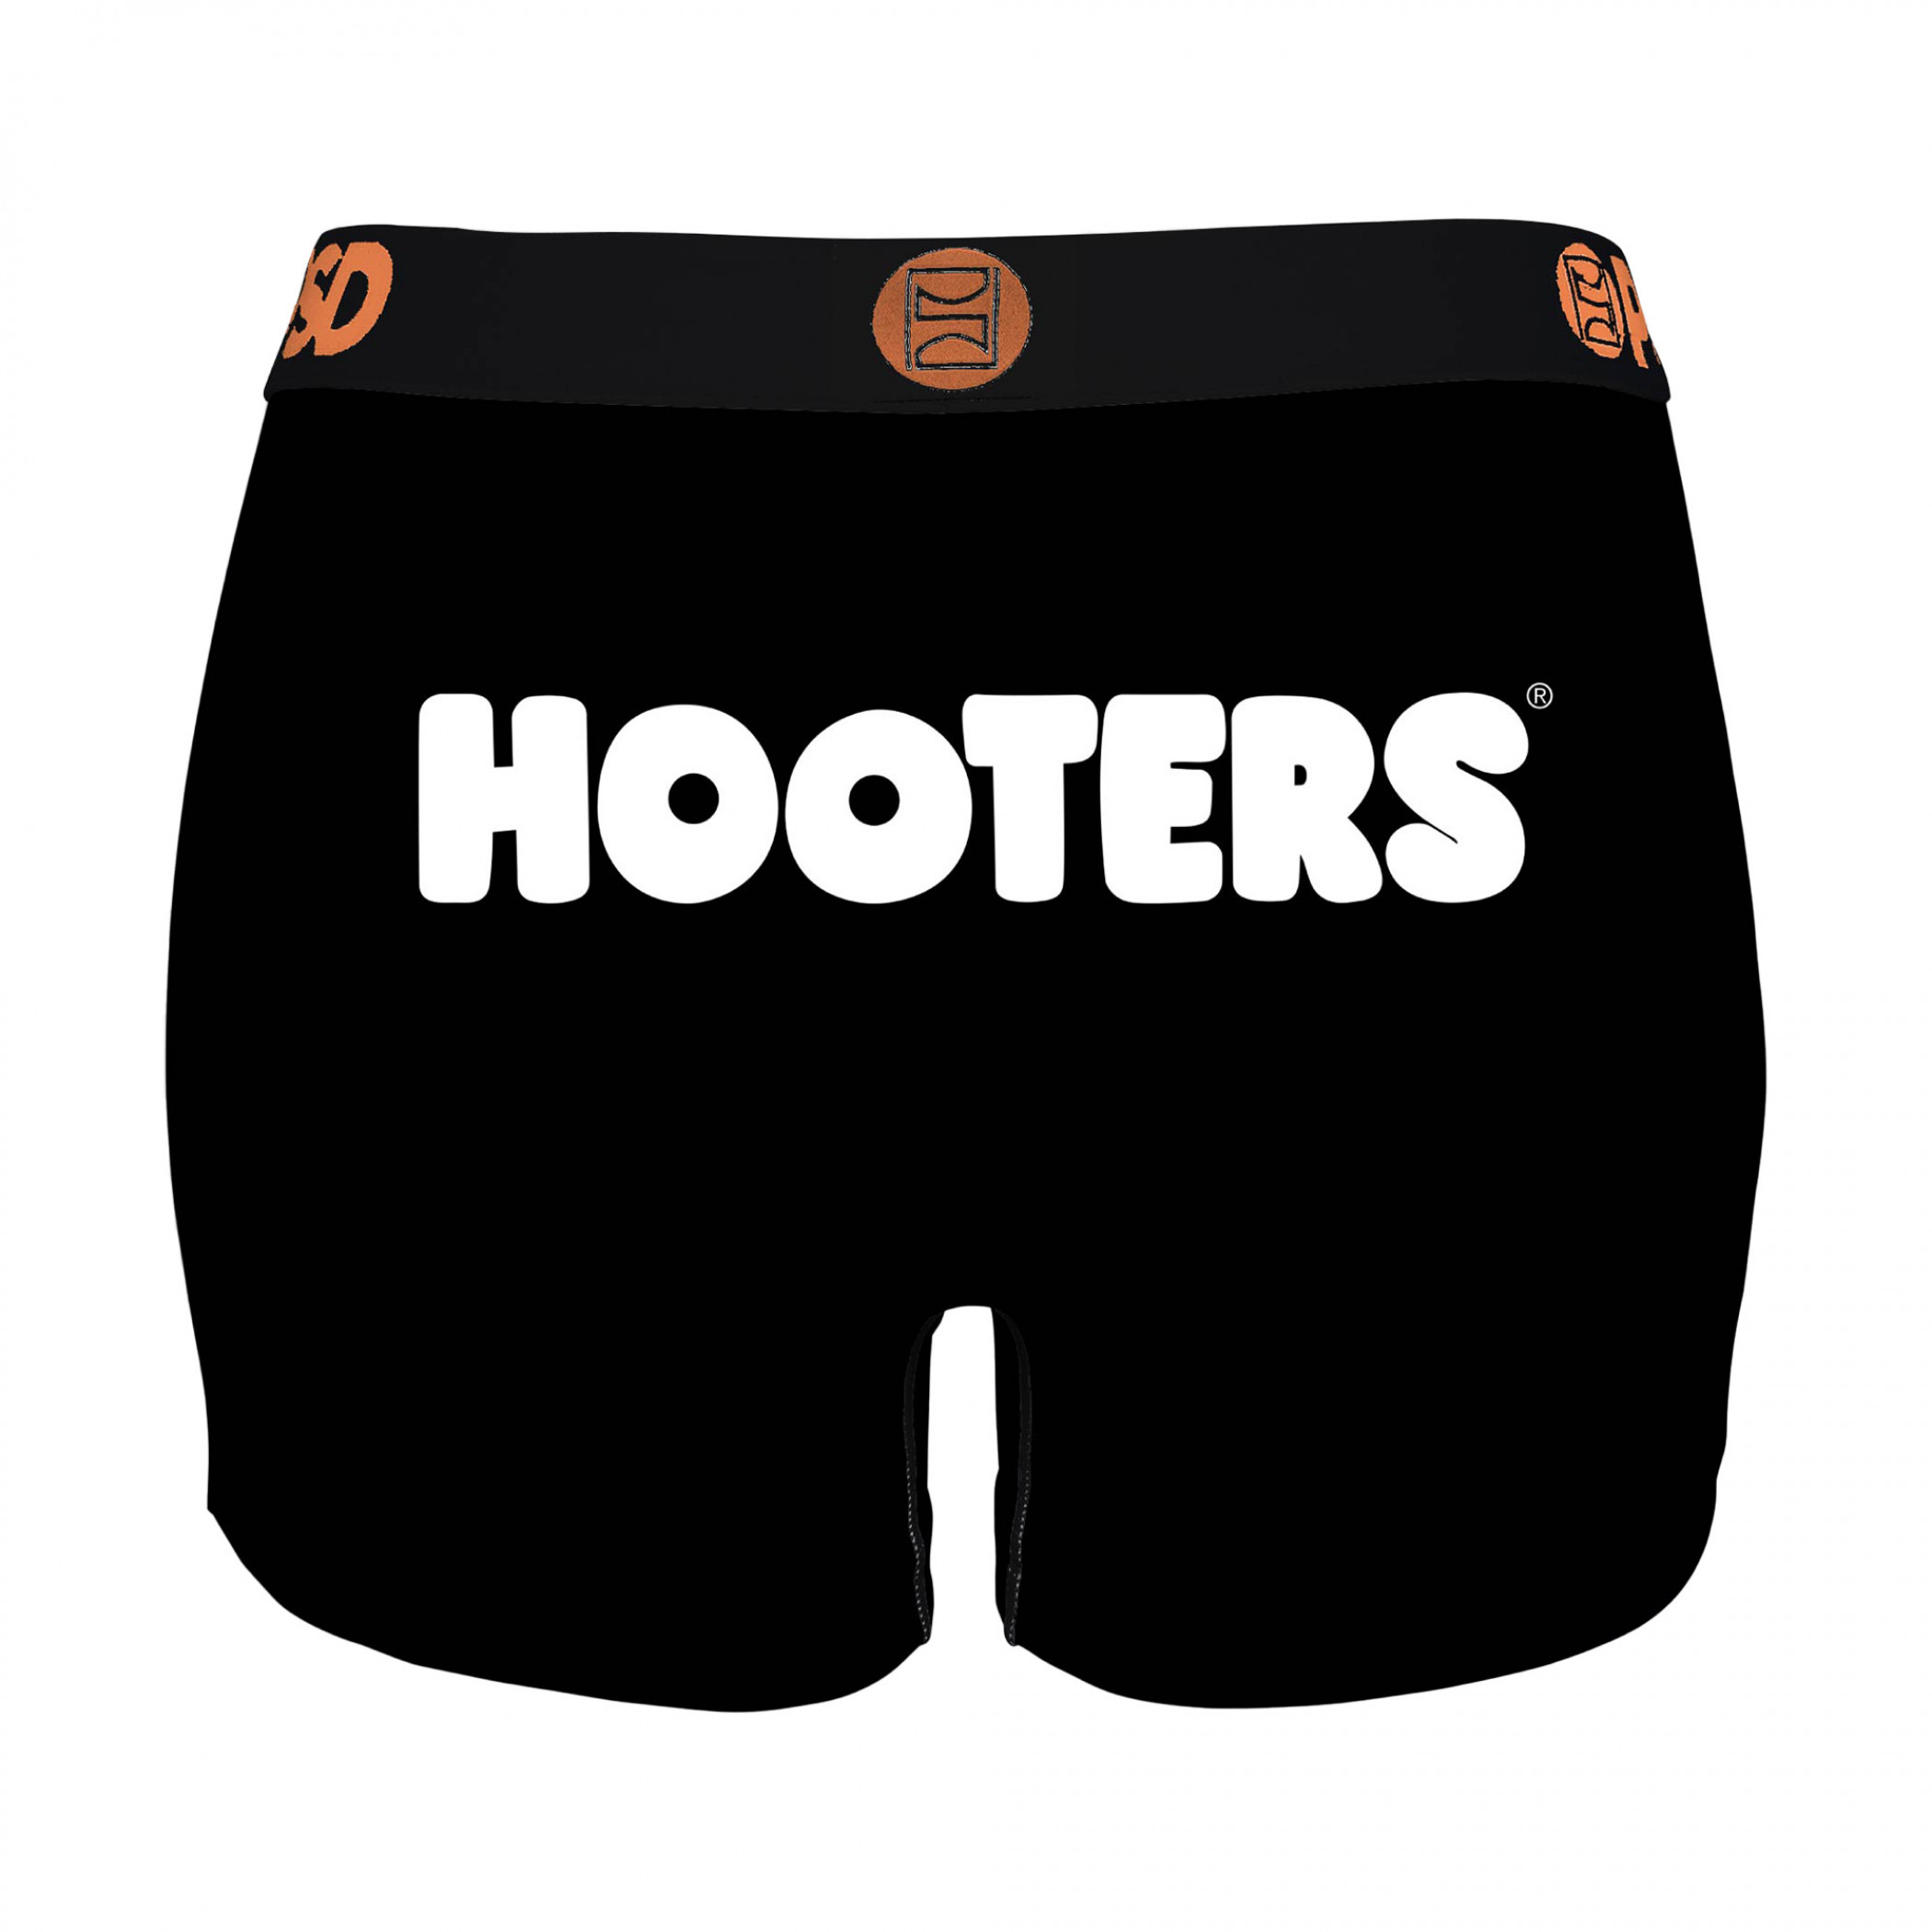 Hooters Restaurant Uniform Black Microfiber Blend PSD Boy Shorts Underwear